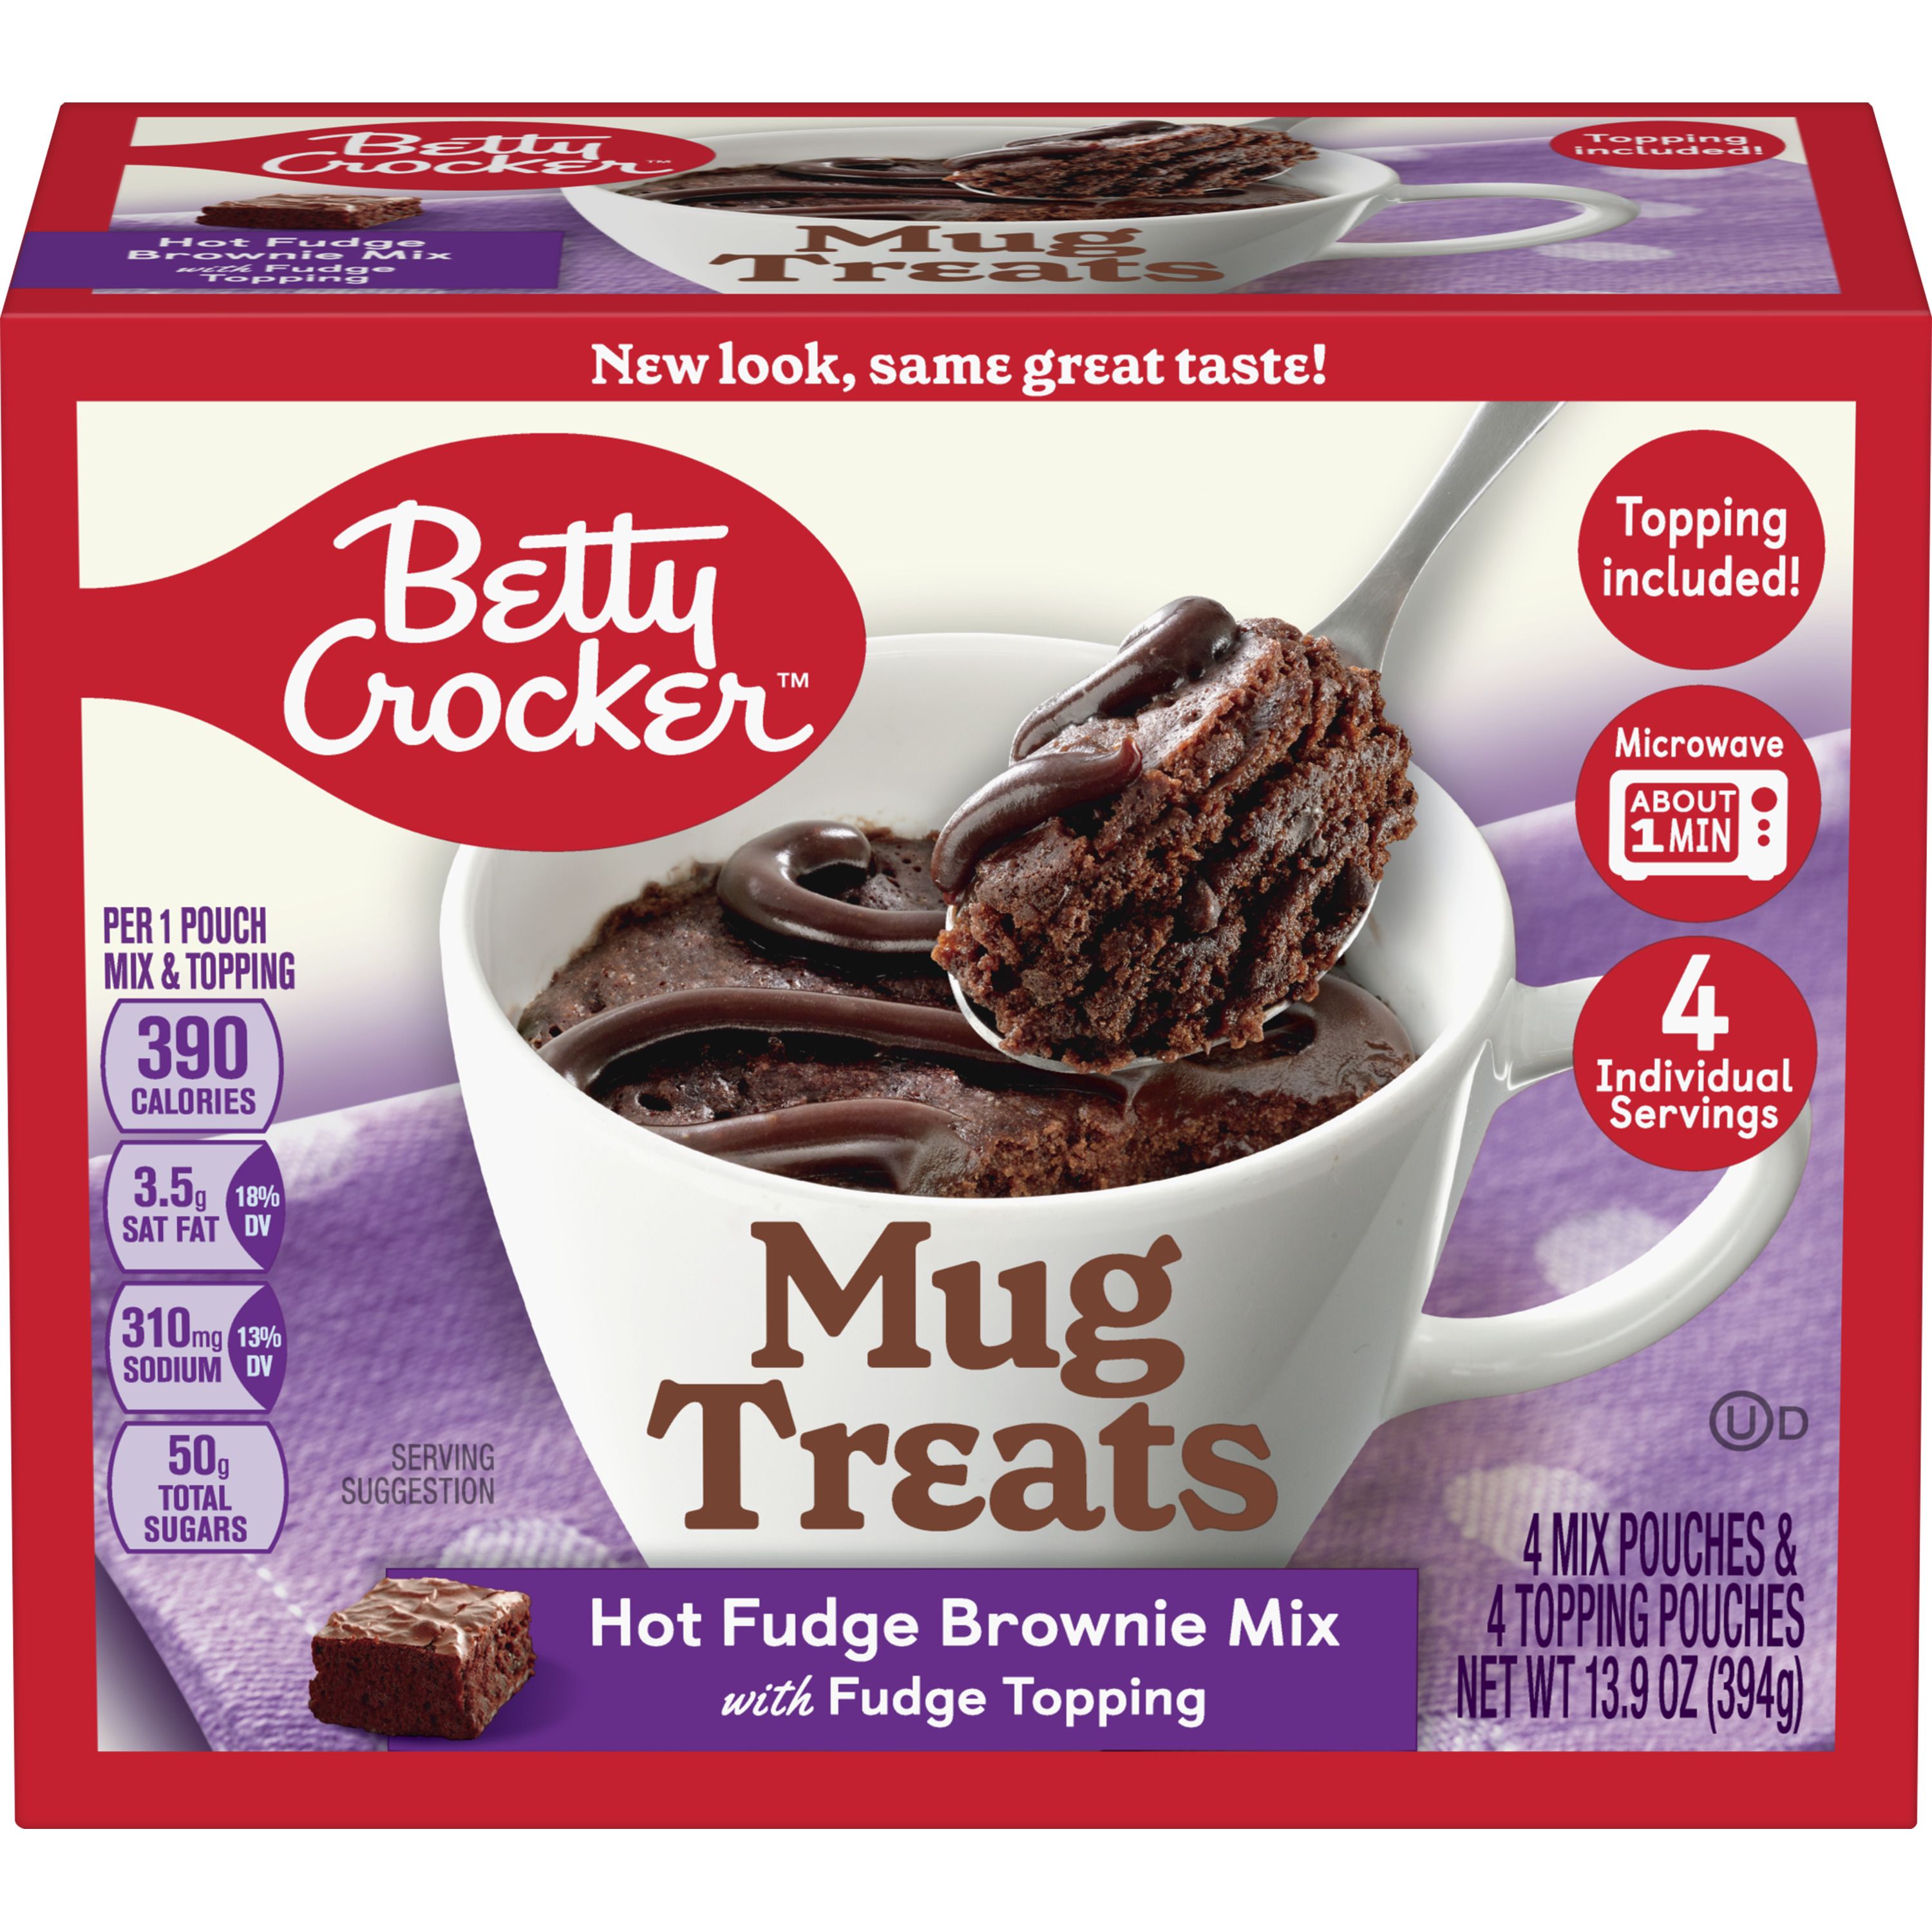 Betty Crocker™ Hot Fudge Brownie Mix Mug Treats with Fudge Topping - Front